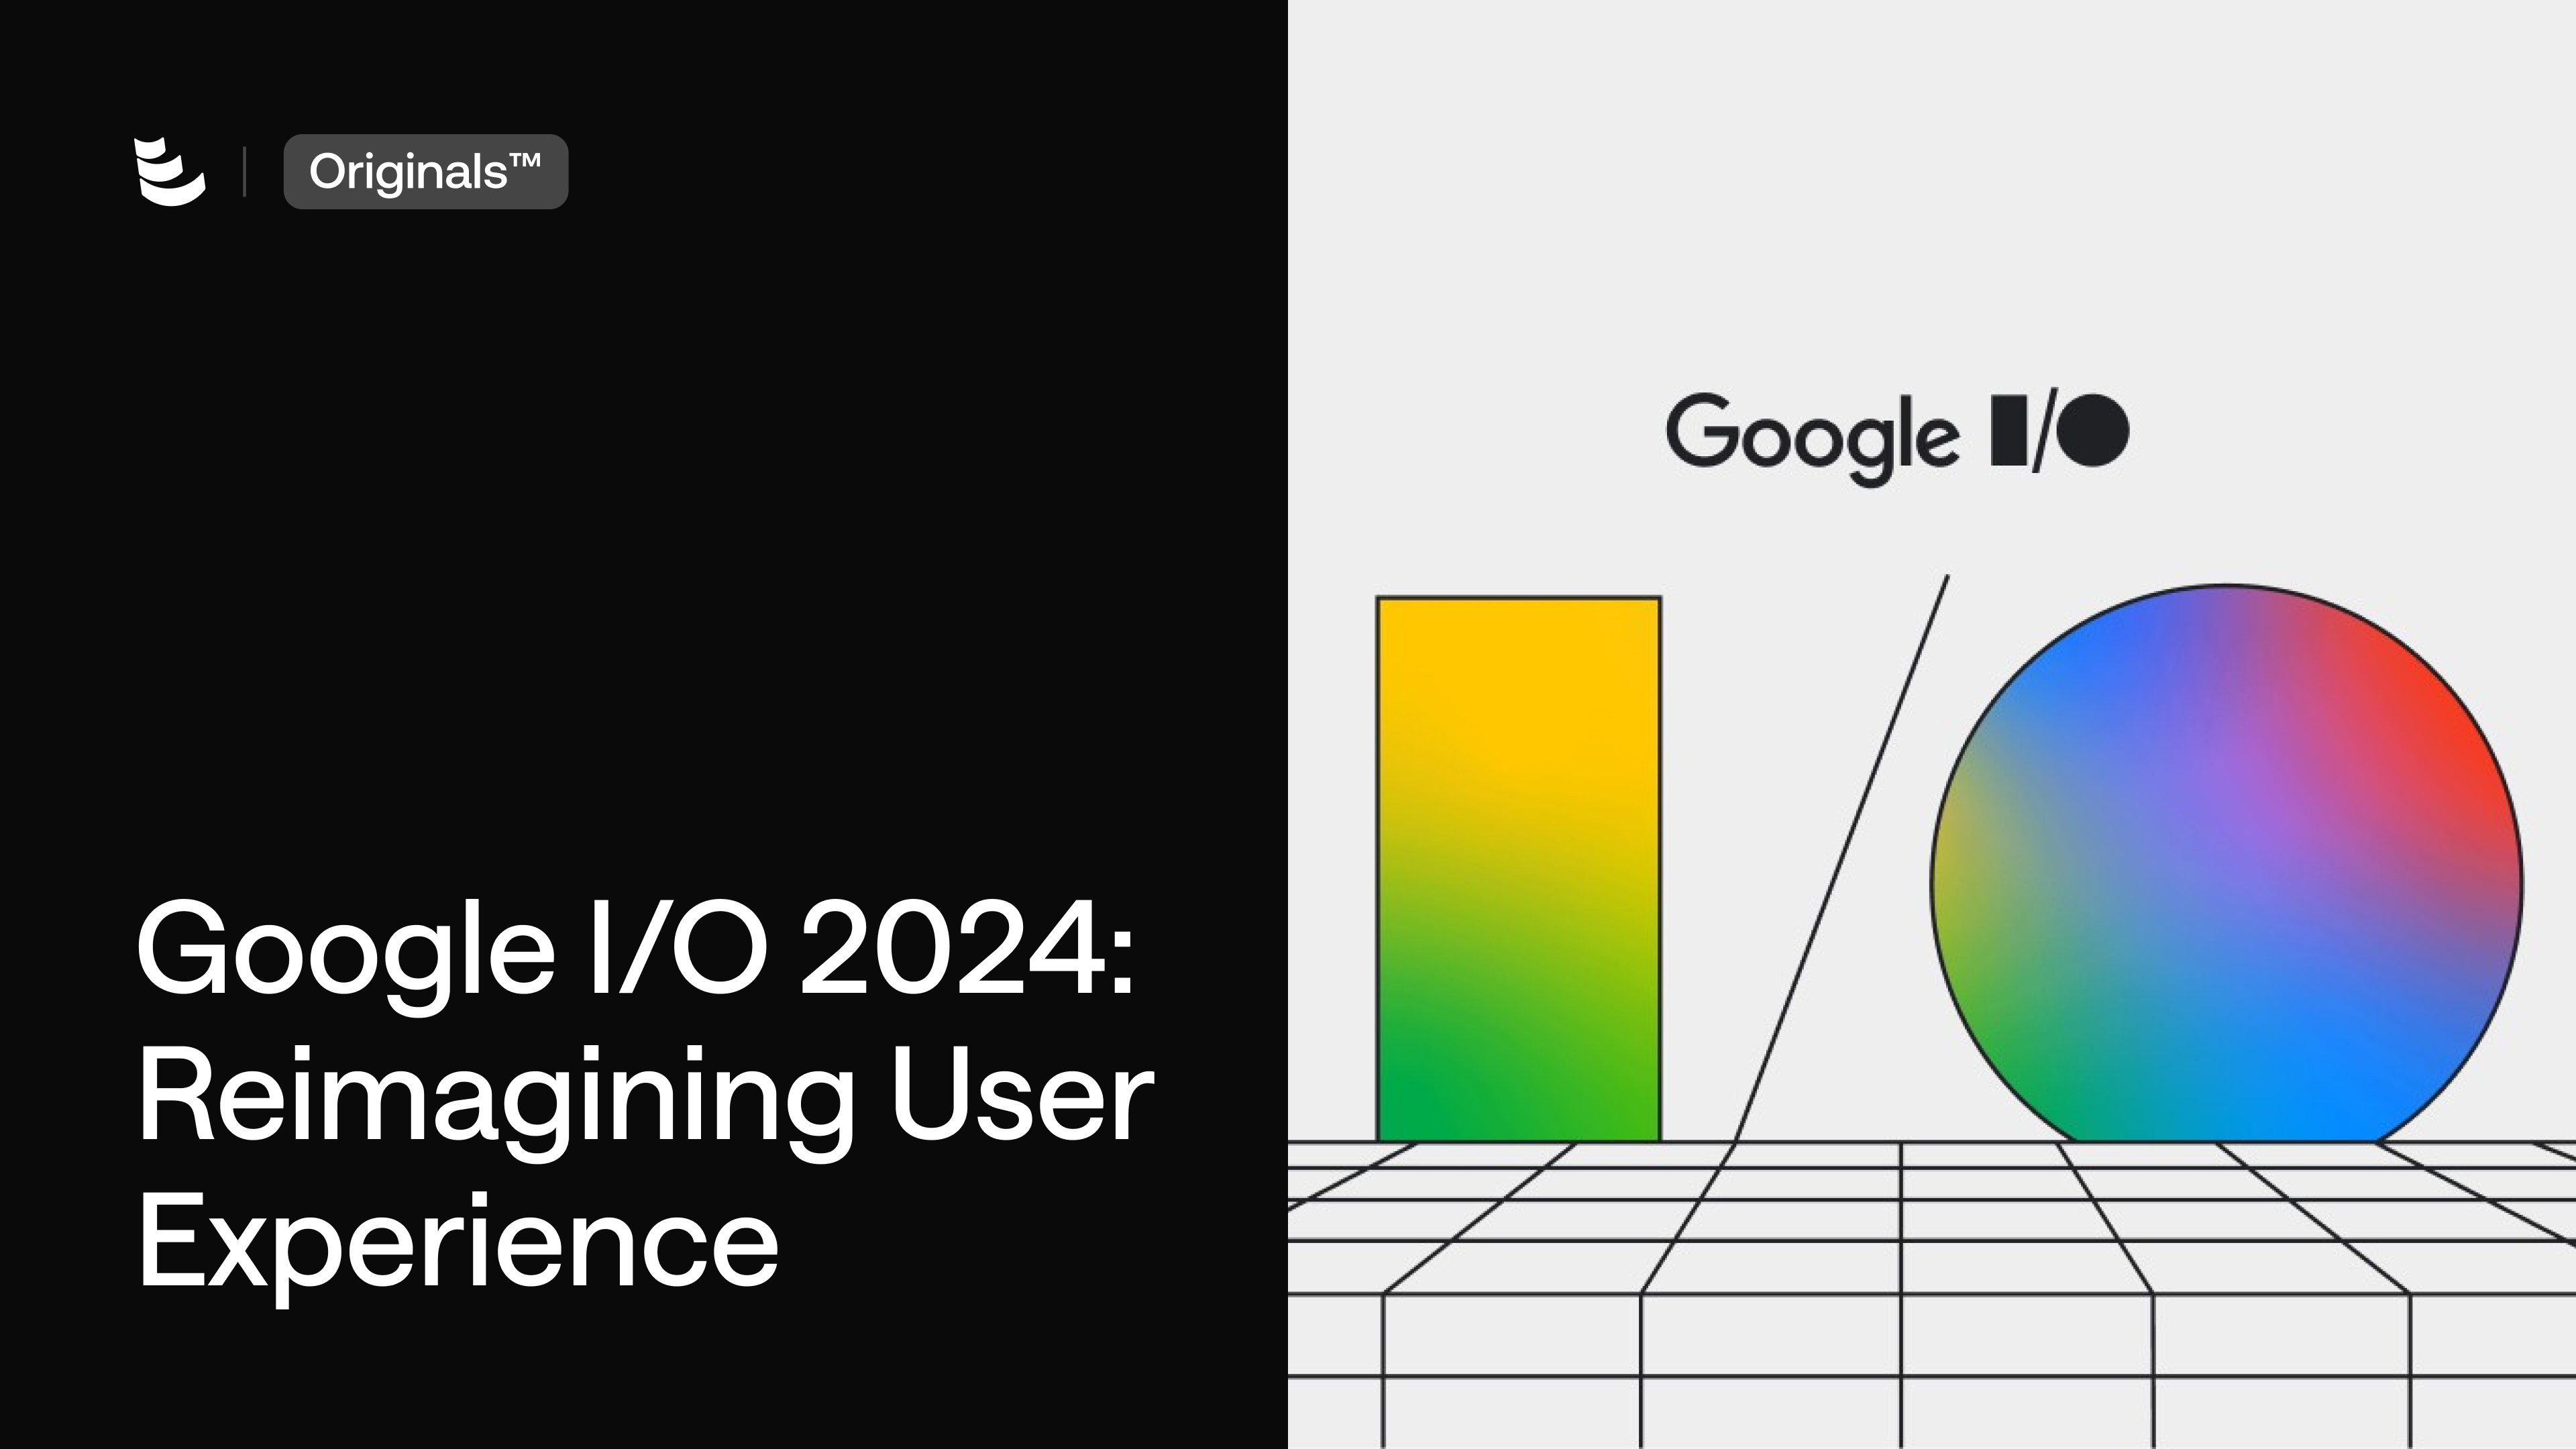 Google I/O 2024: A New Era of Innovation